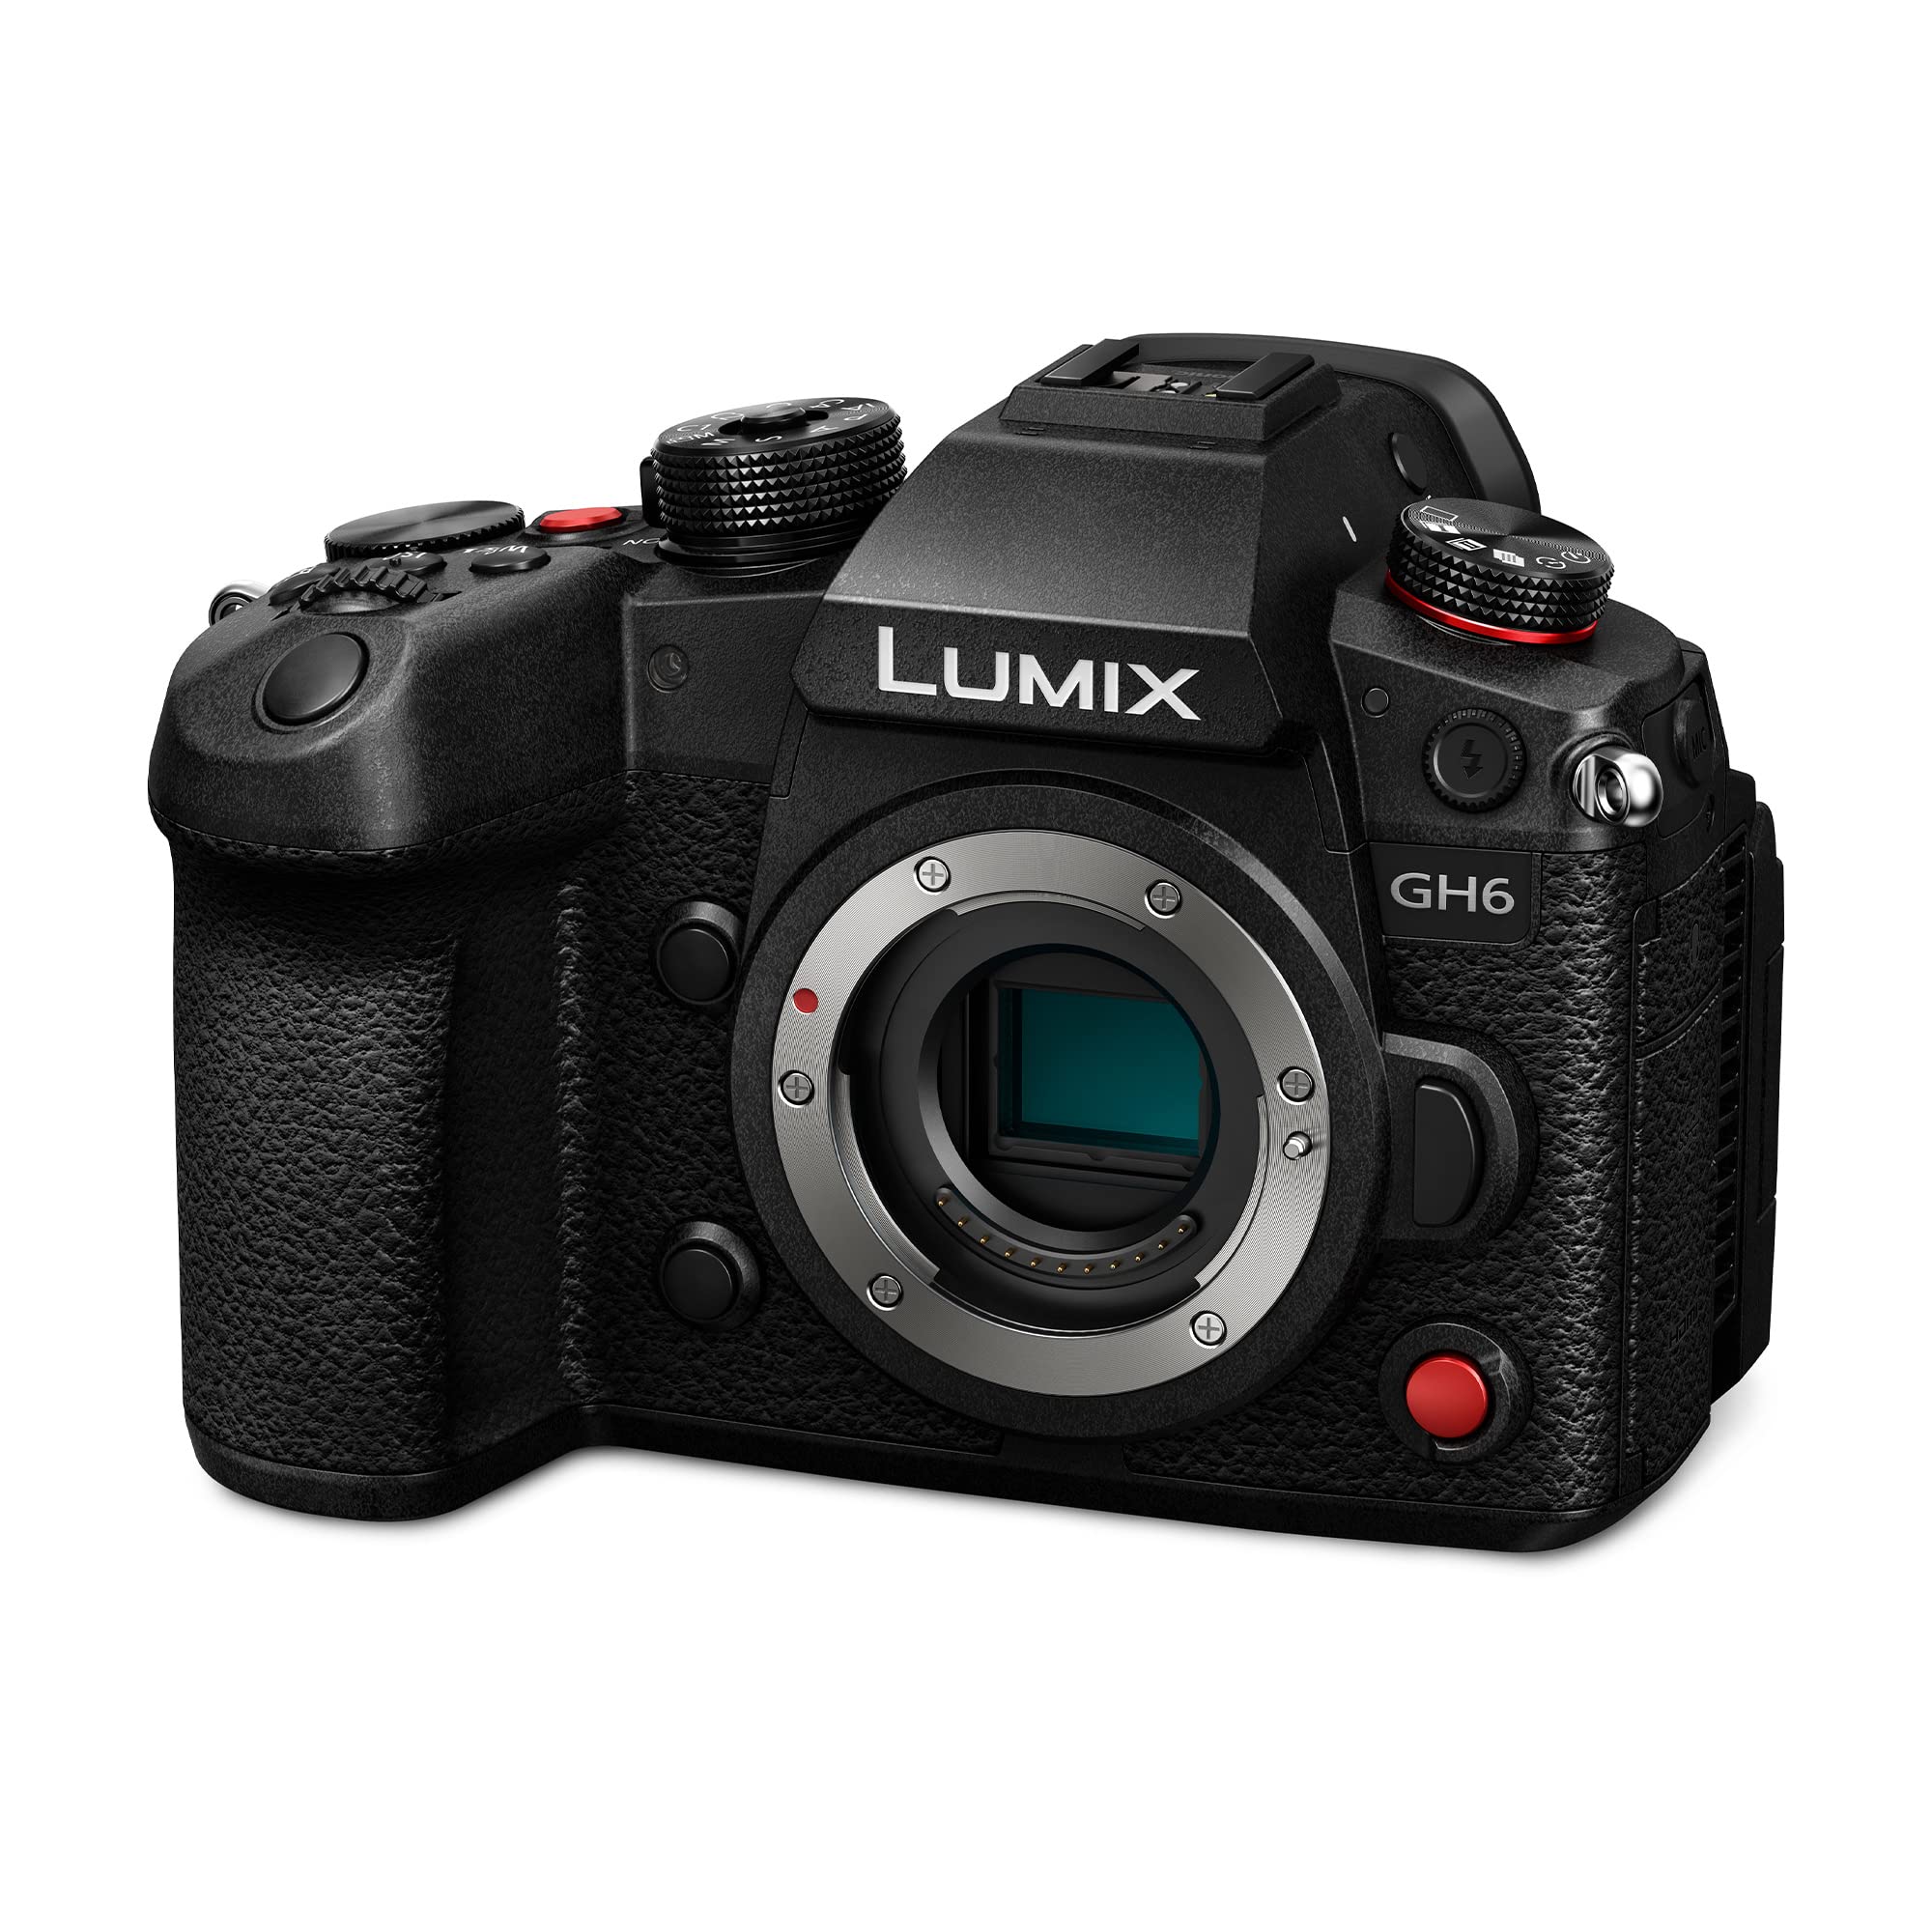 Panasonic LUMIX GH6 25.2MP Mirrorless Camera Body with Dual Image Stabilizer (Renewed)